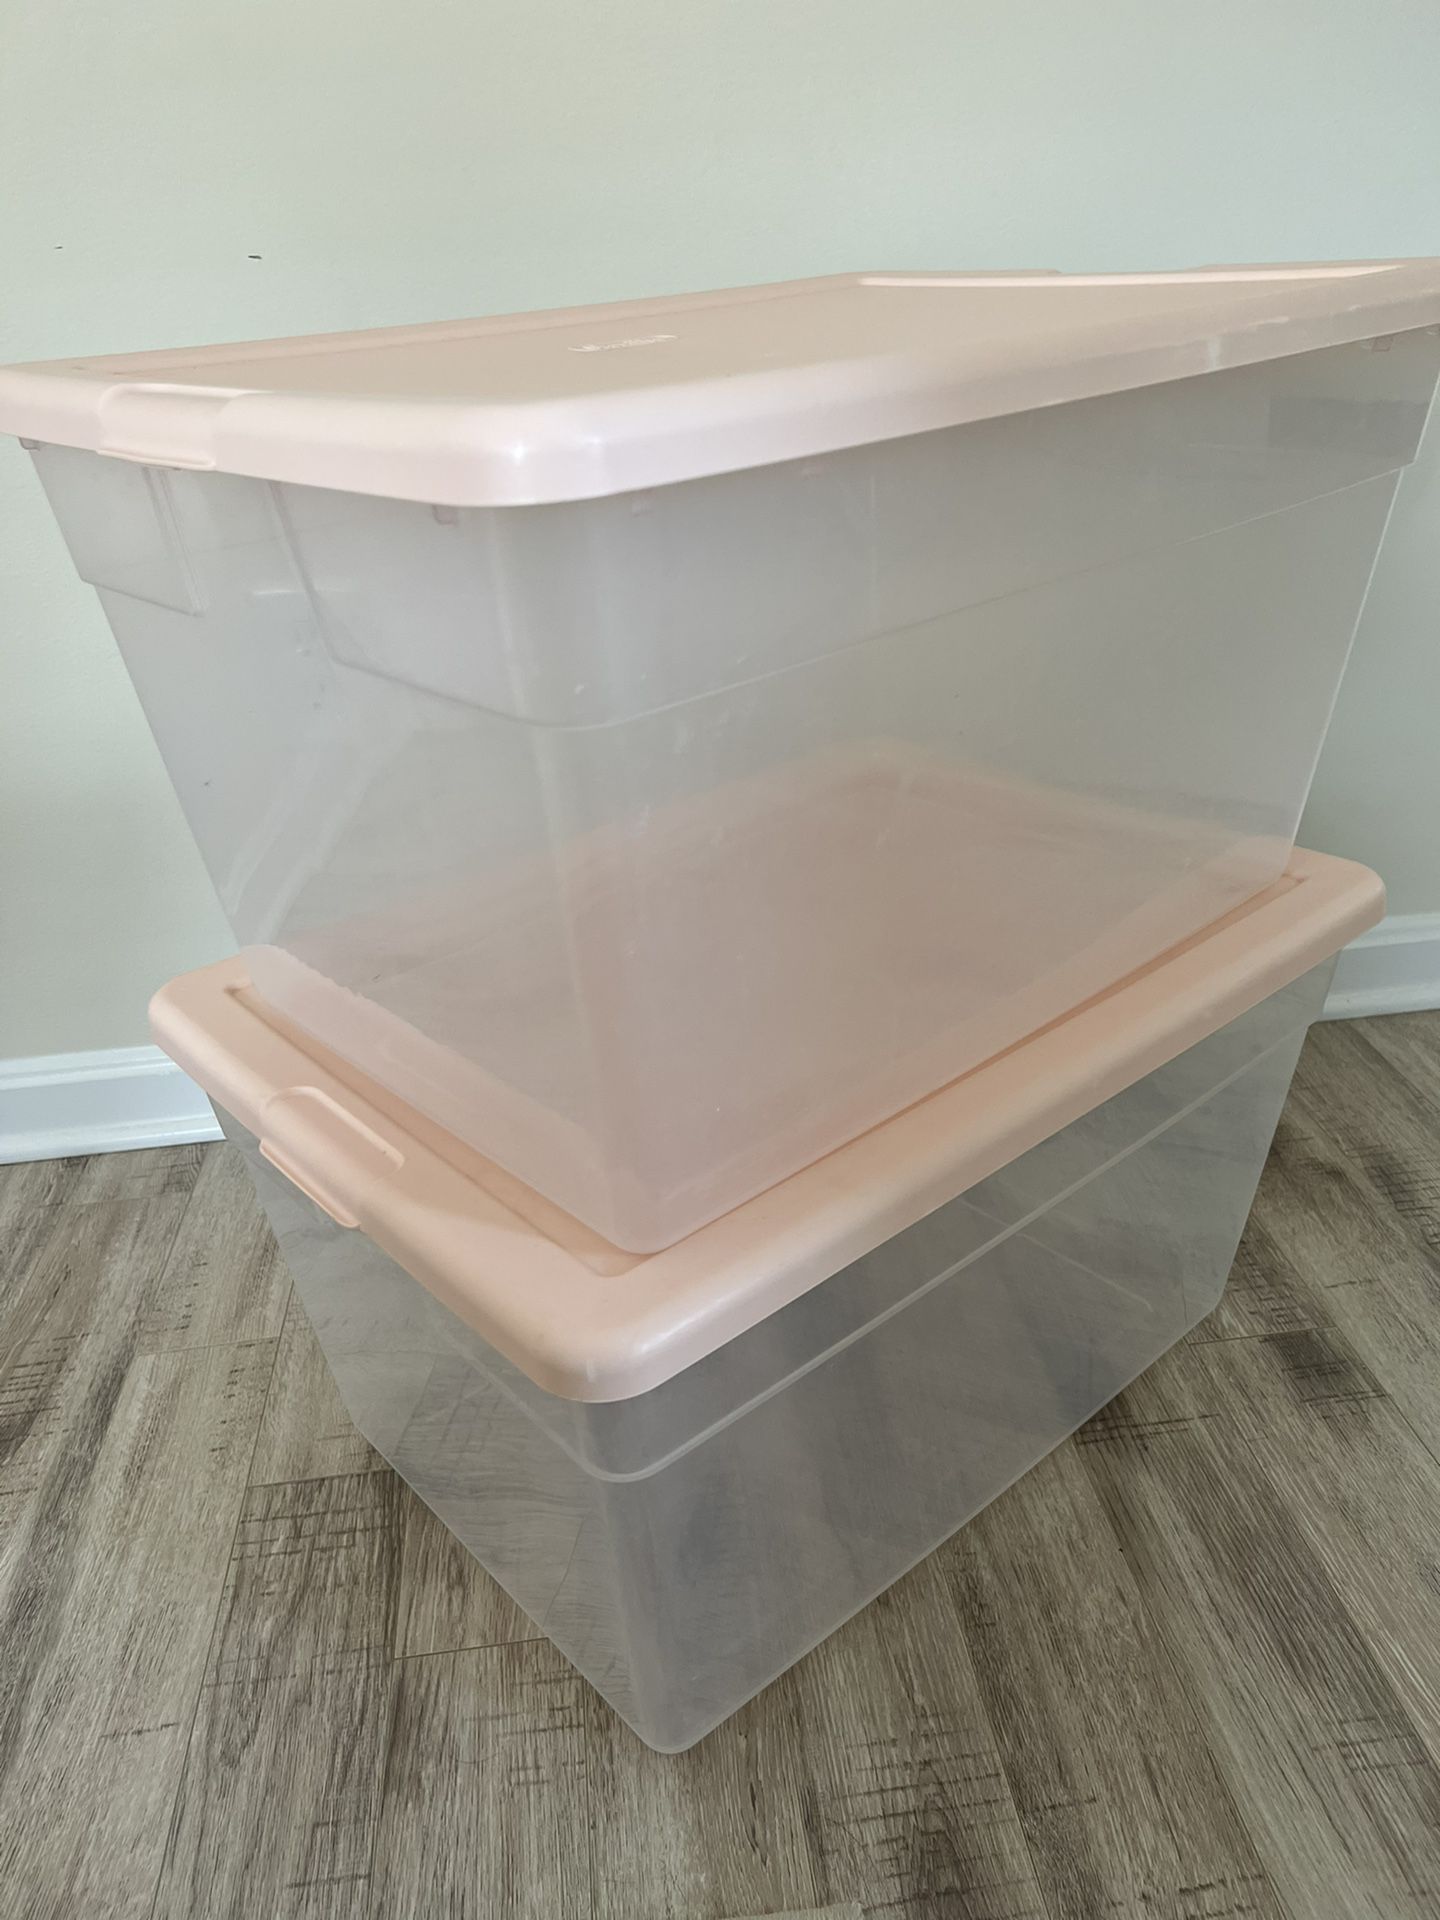 Two Plastic Storage Boxes